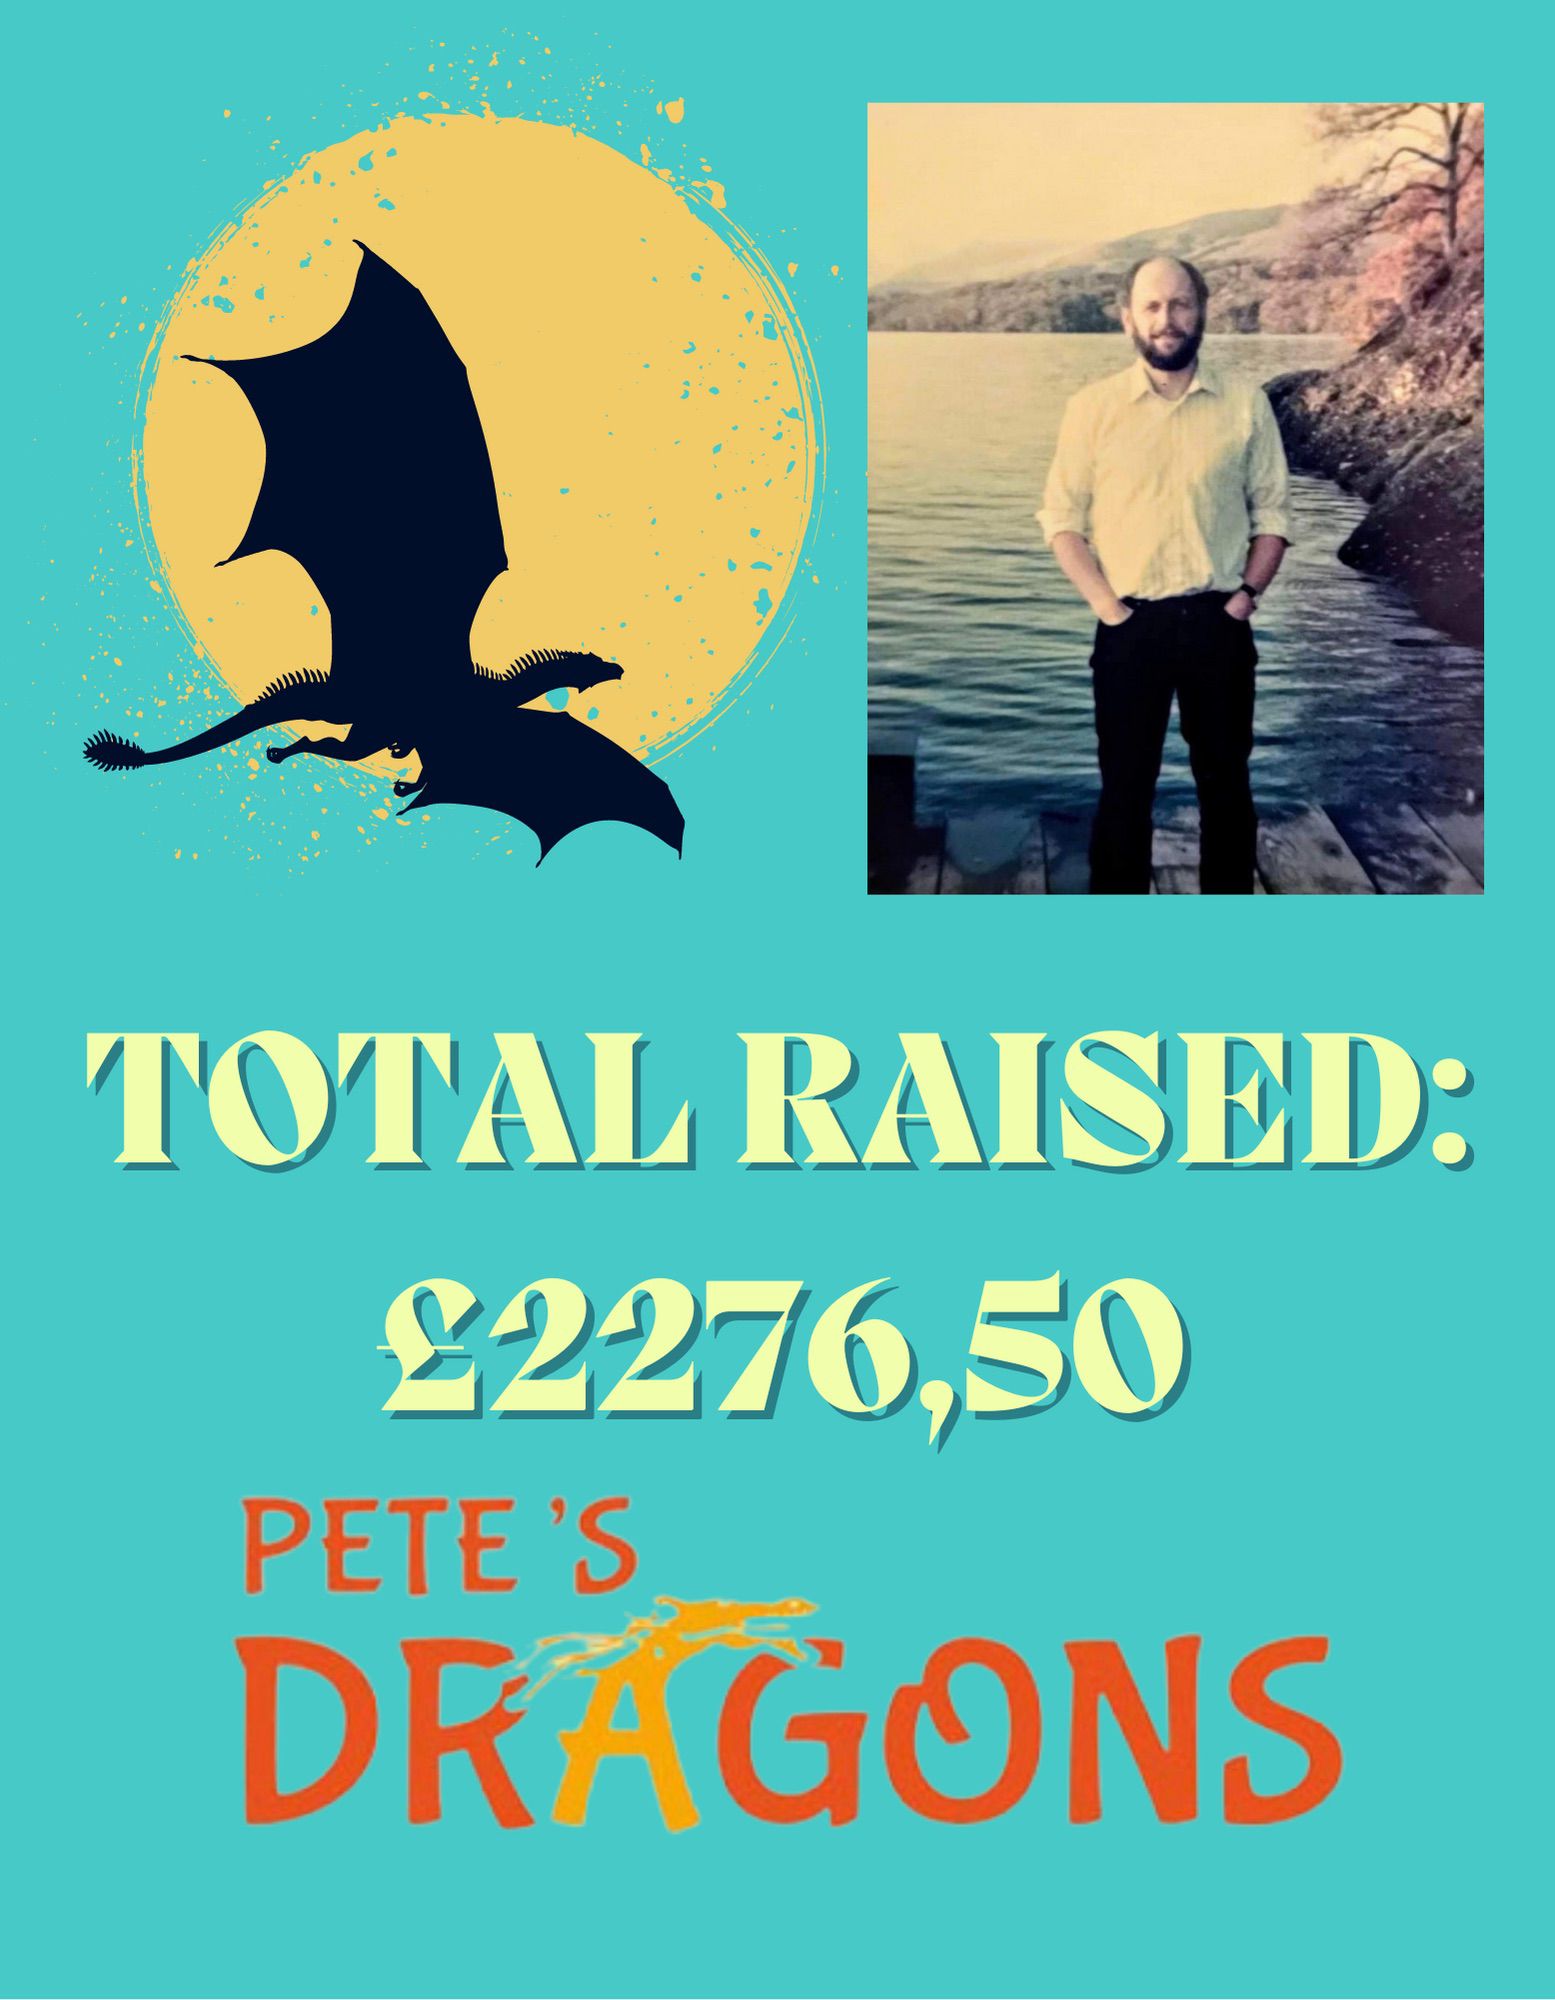 Petes Dragons £2276.50 raised